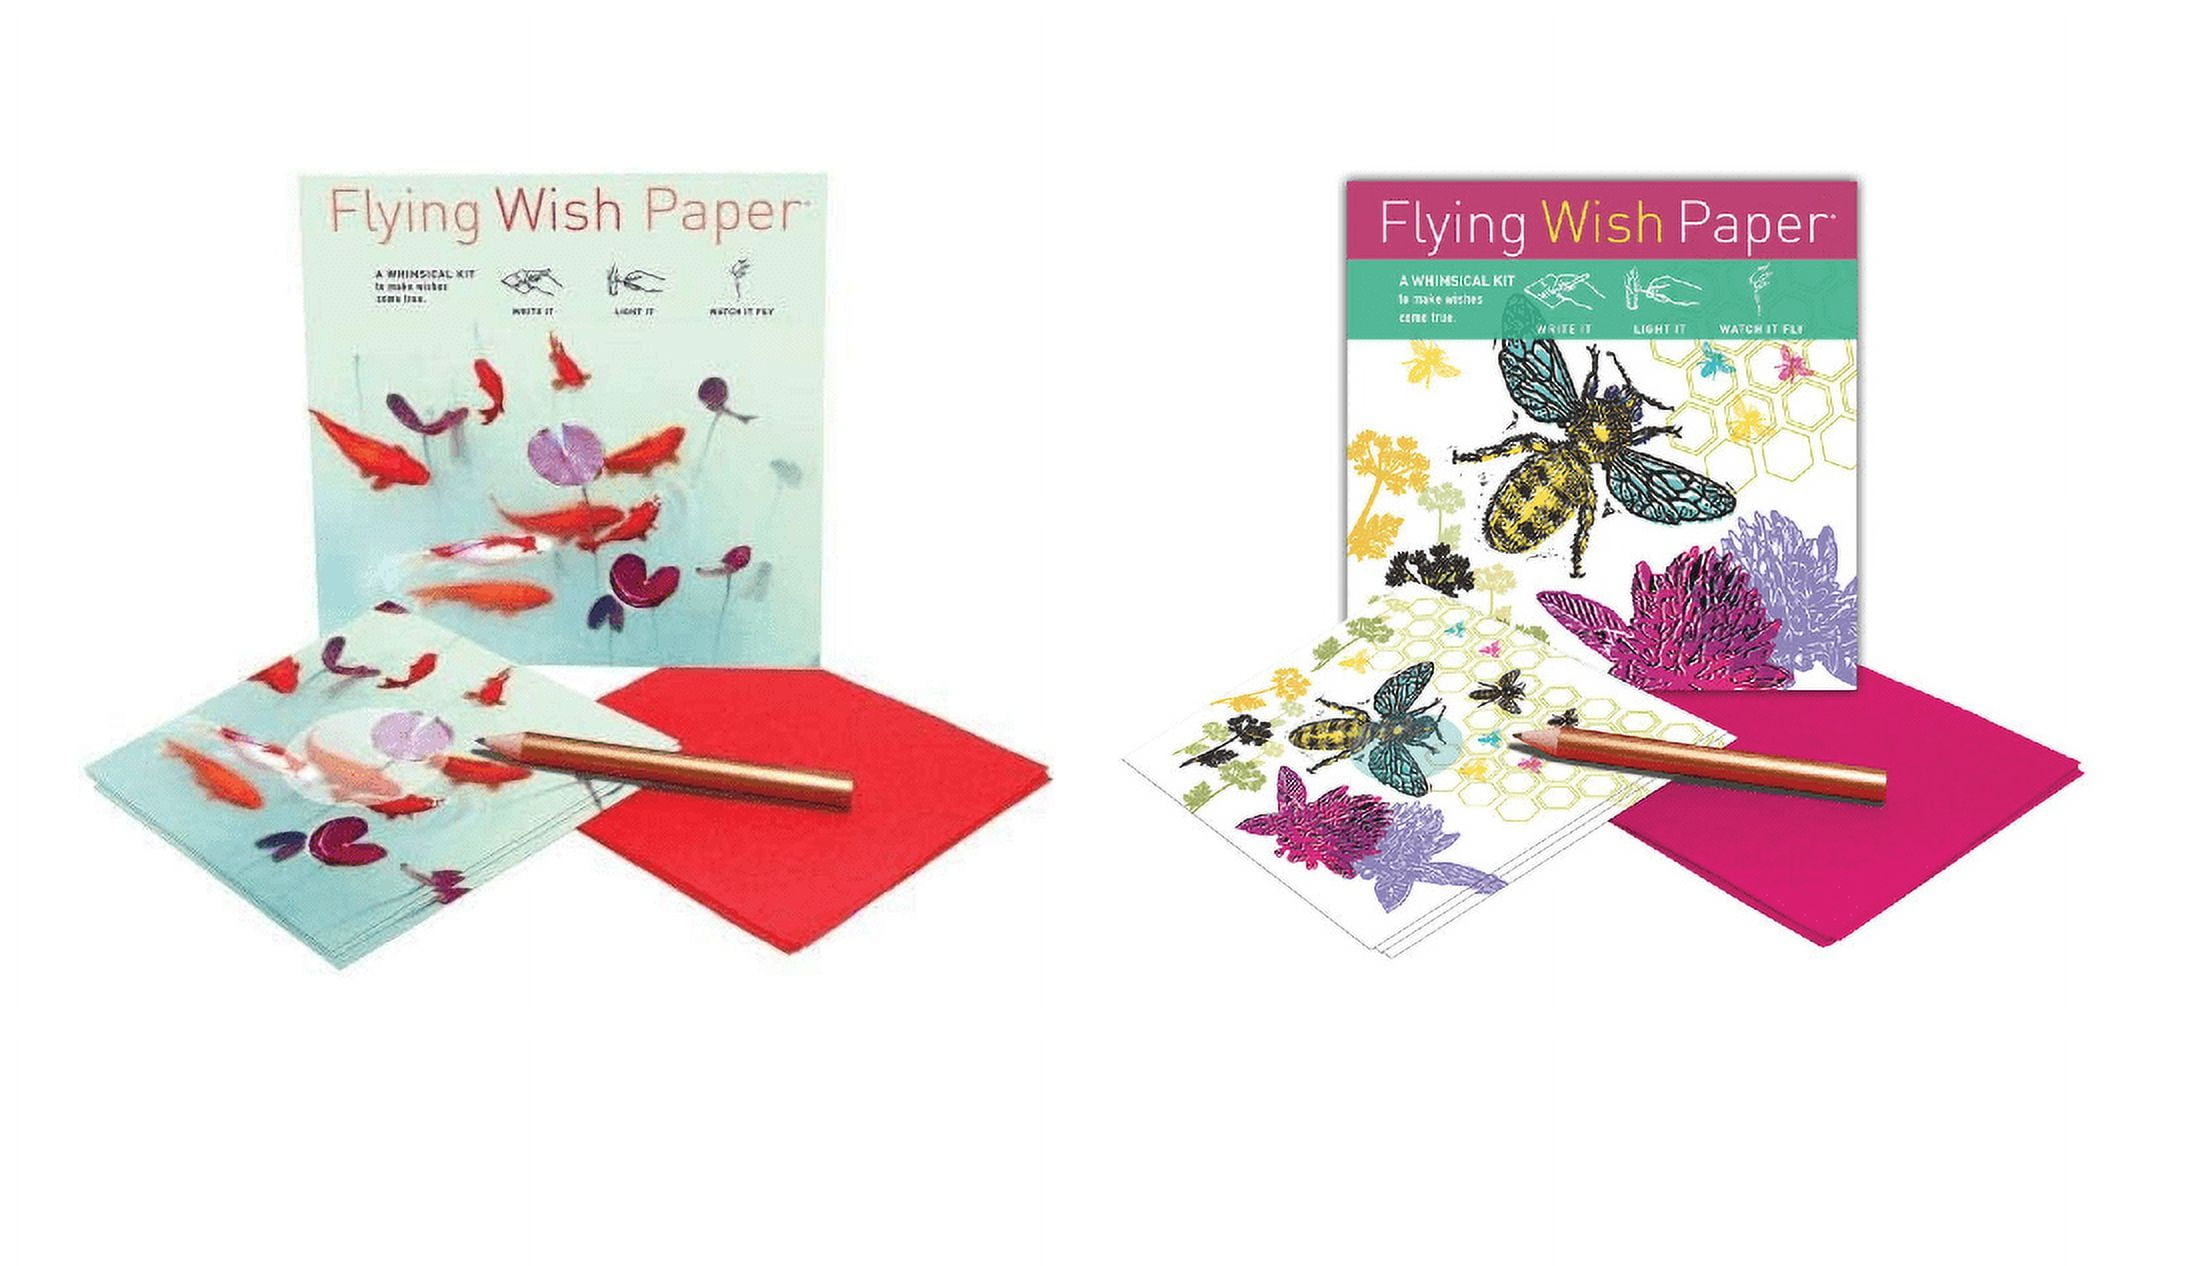 Flying Wish Paper Combo Pack, 2 x Koi Pond + 1 x Just Bee, Mini Kit Combos,  Write it, Light it, Watch it Fly - (3 x Mini Sets) - 5 x 5 Each 